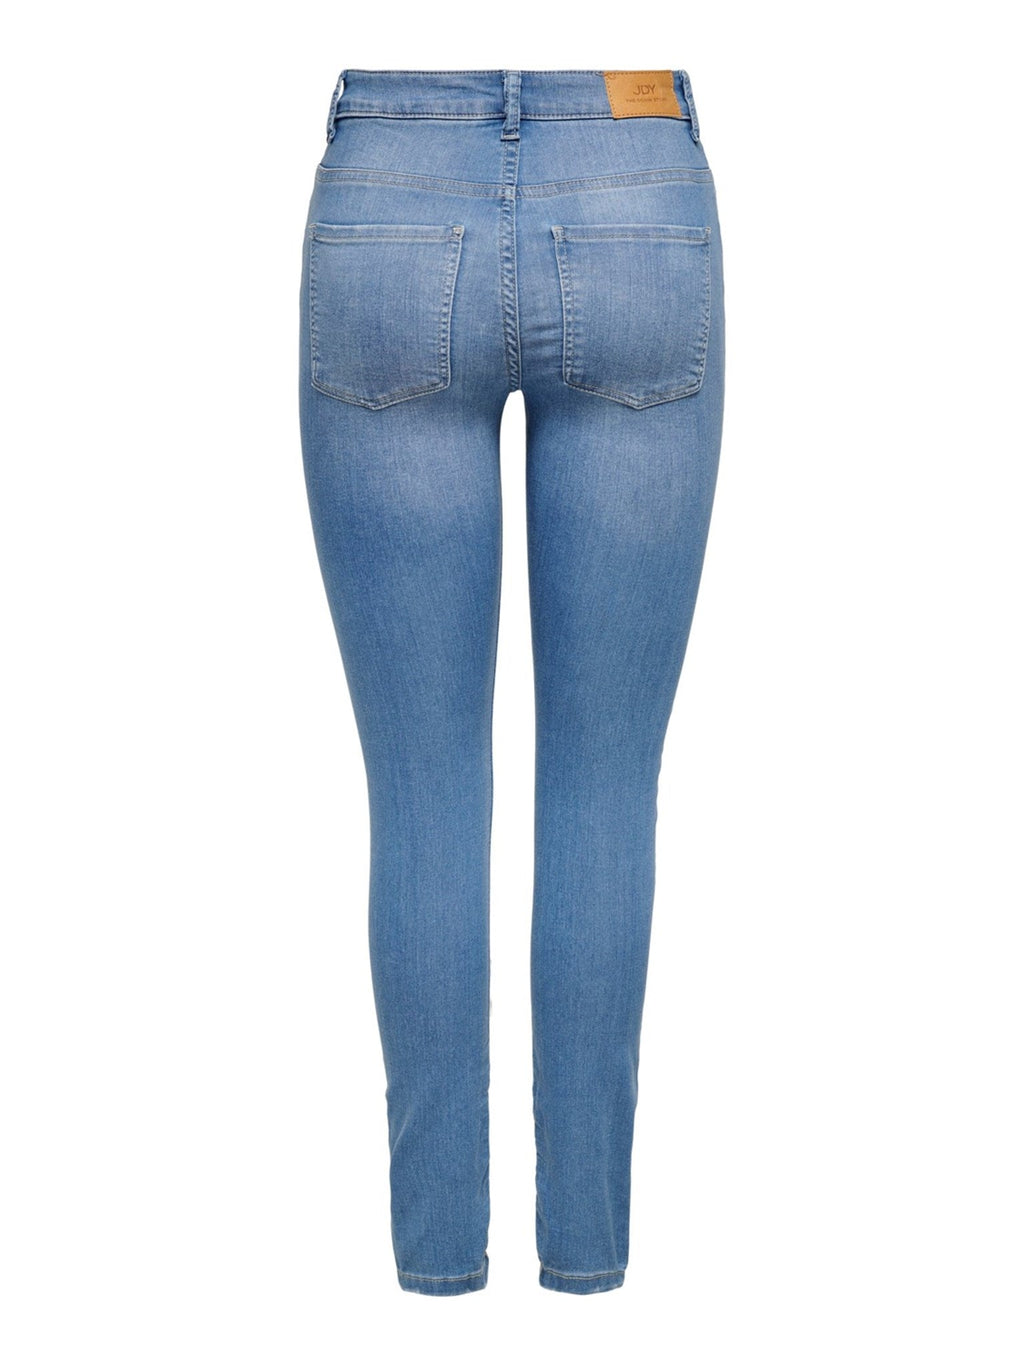 Performance Jeans - hellblau (mittlere Taille)